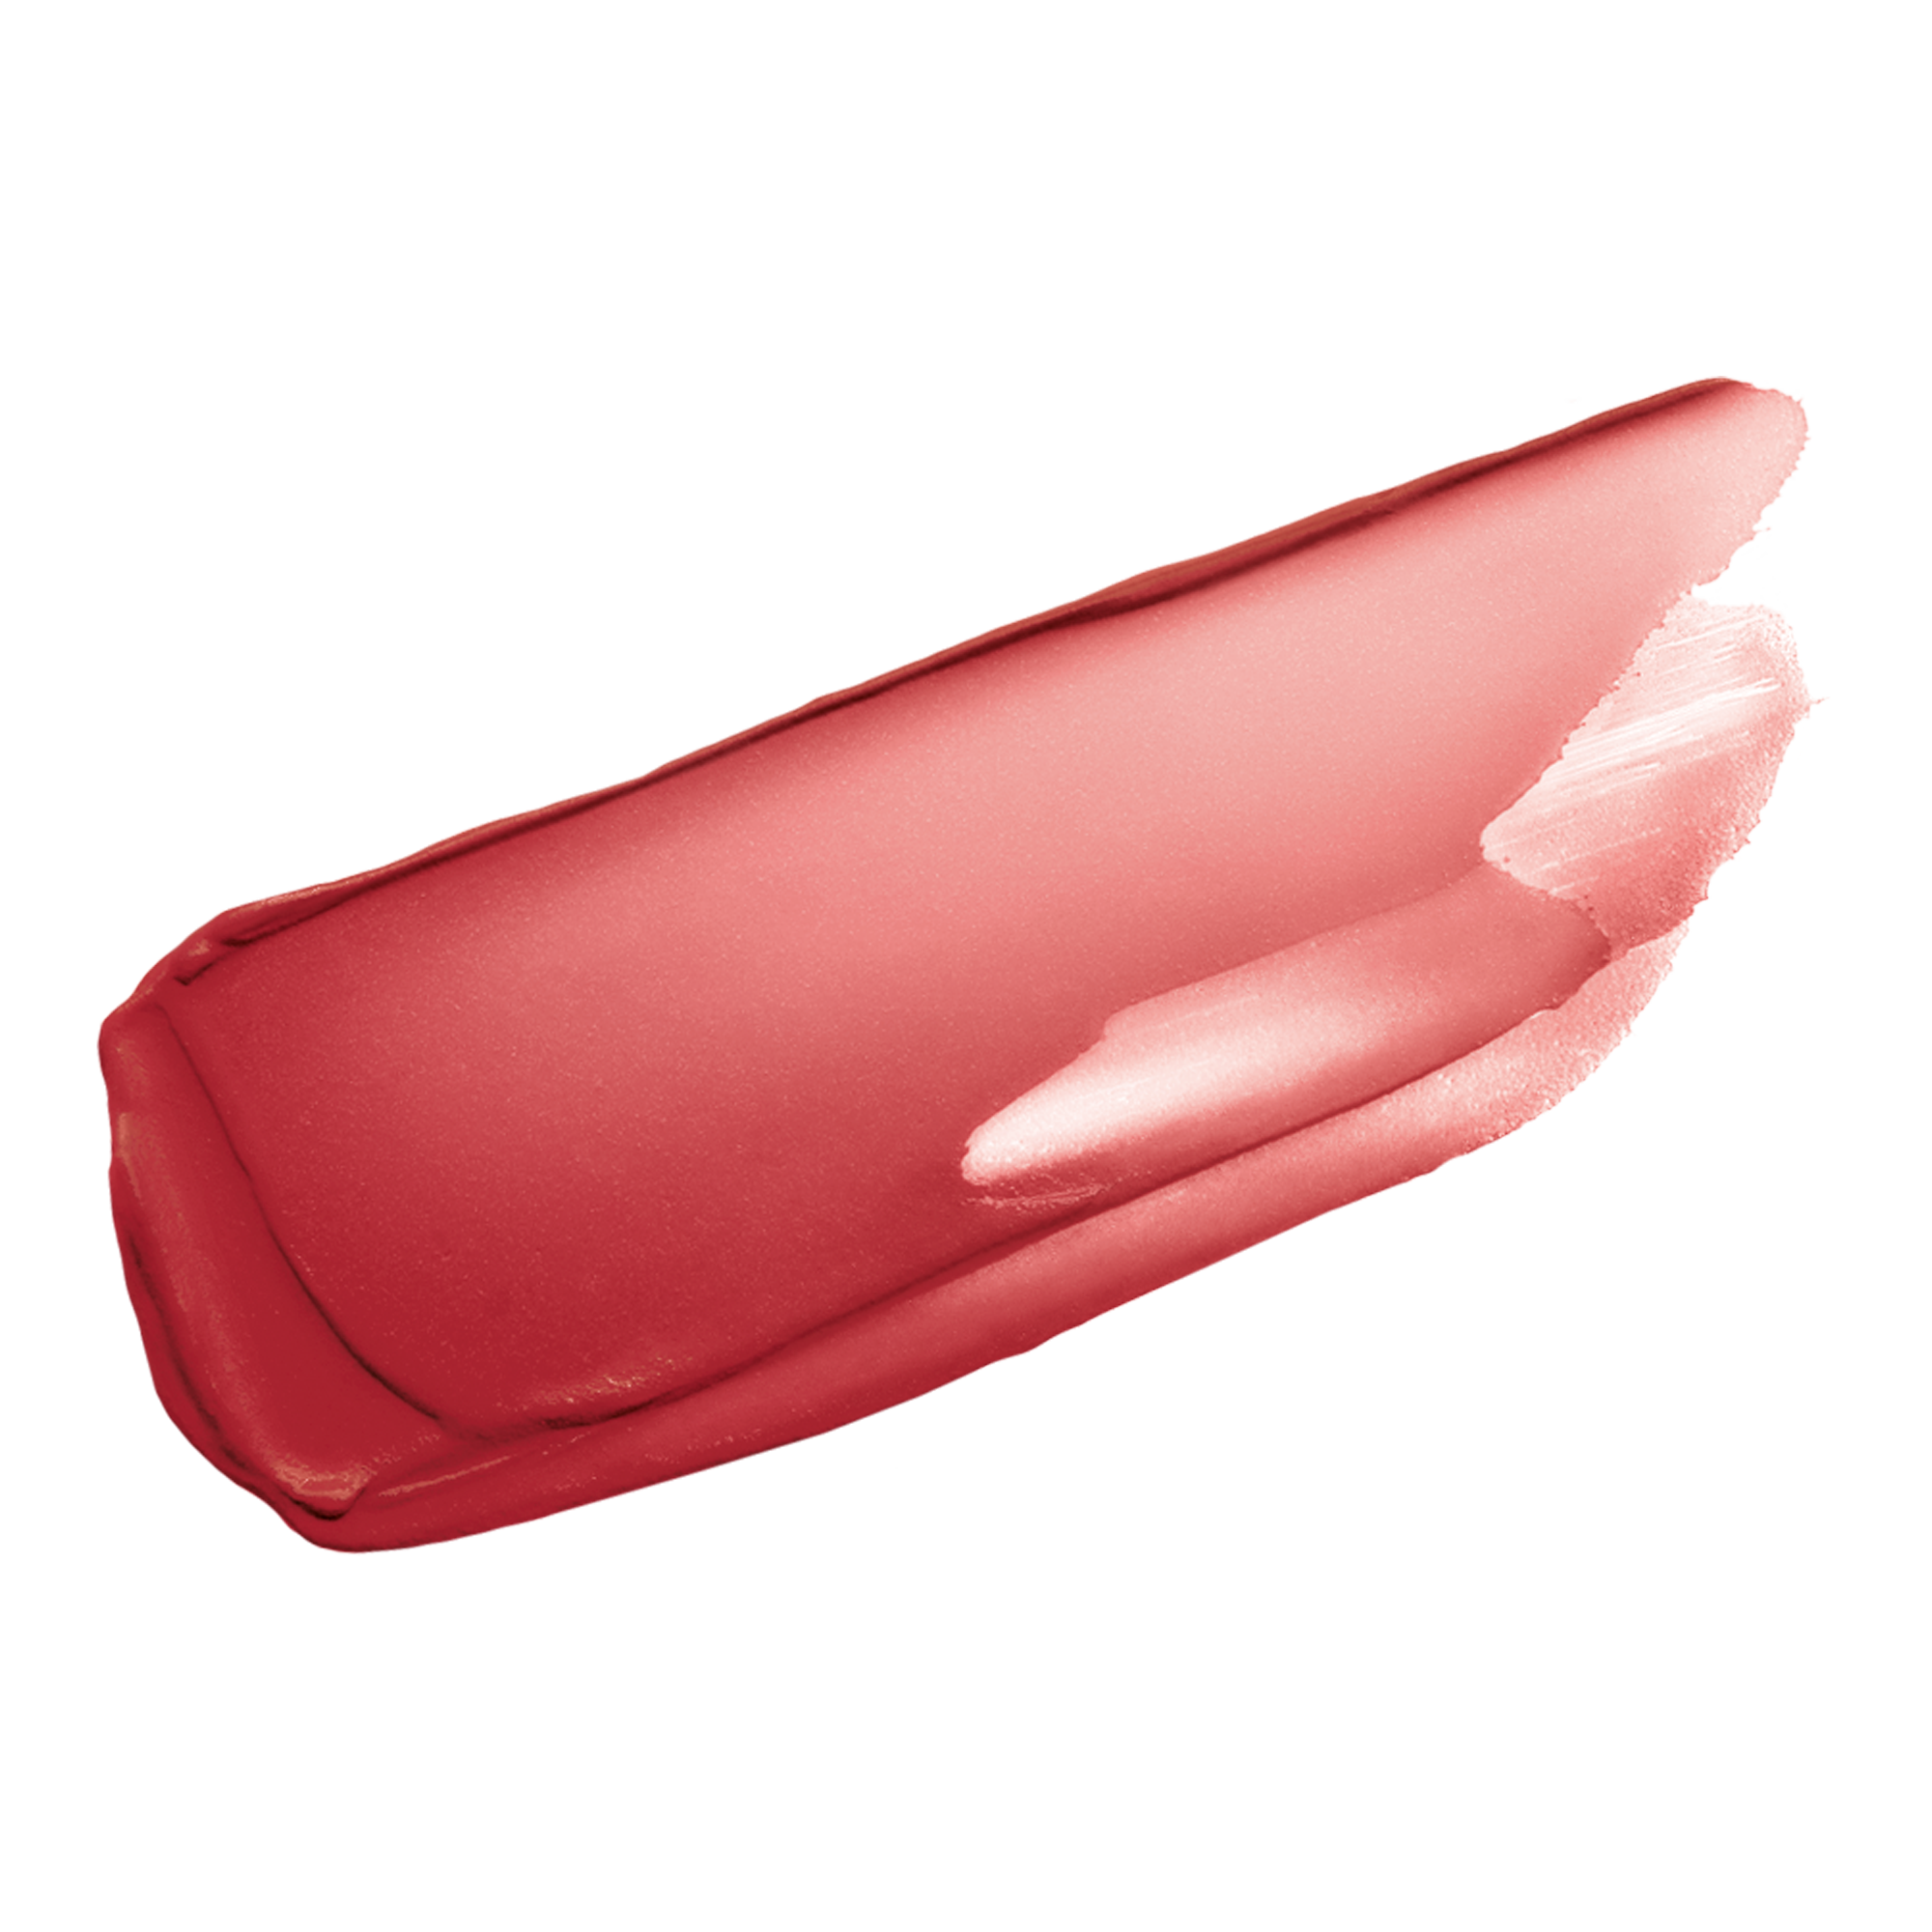 givenchy le rouge liquid lipstick